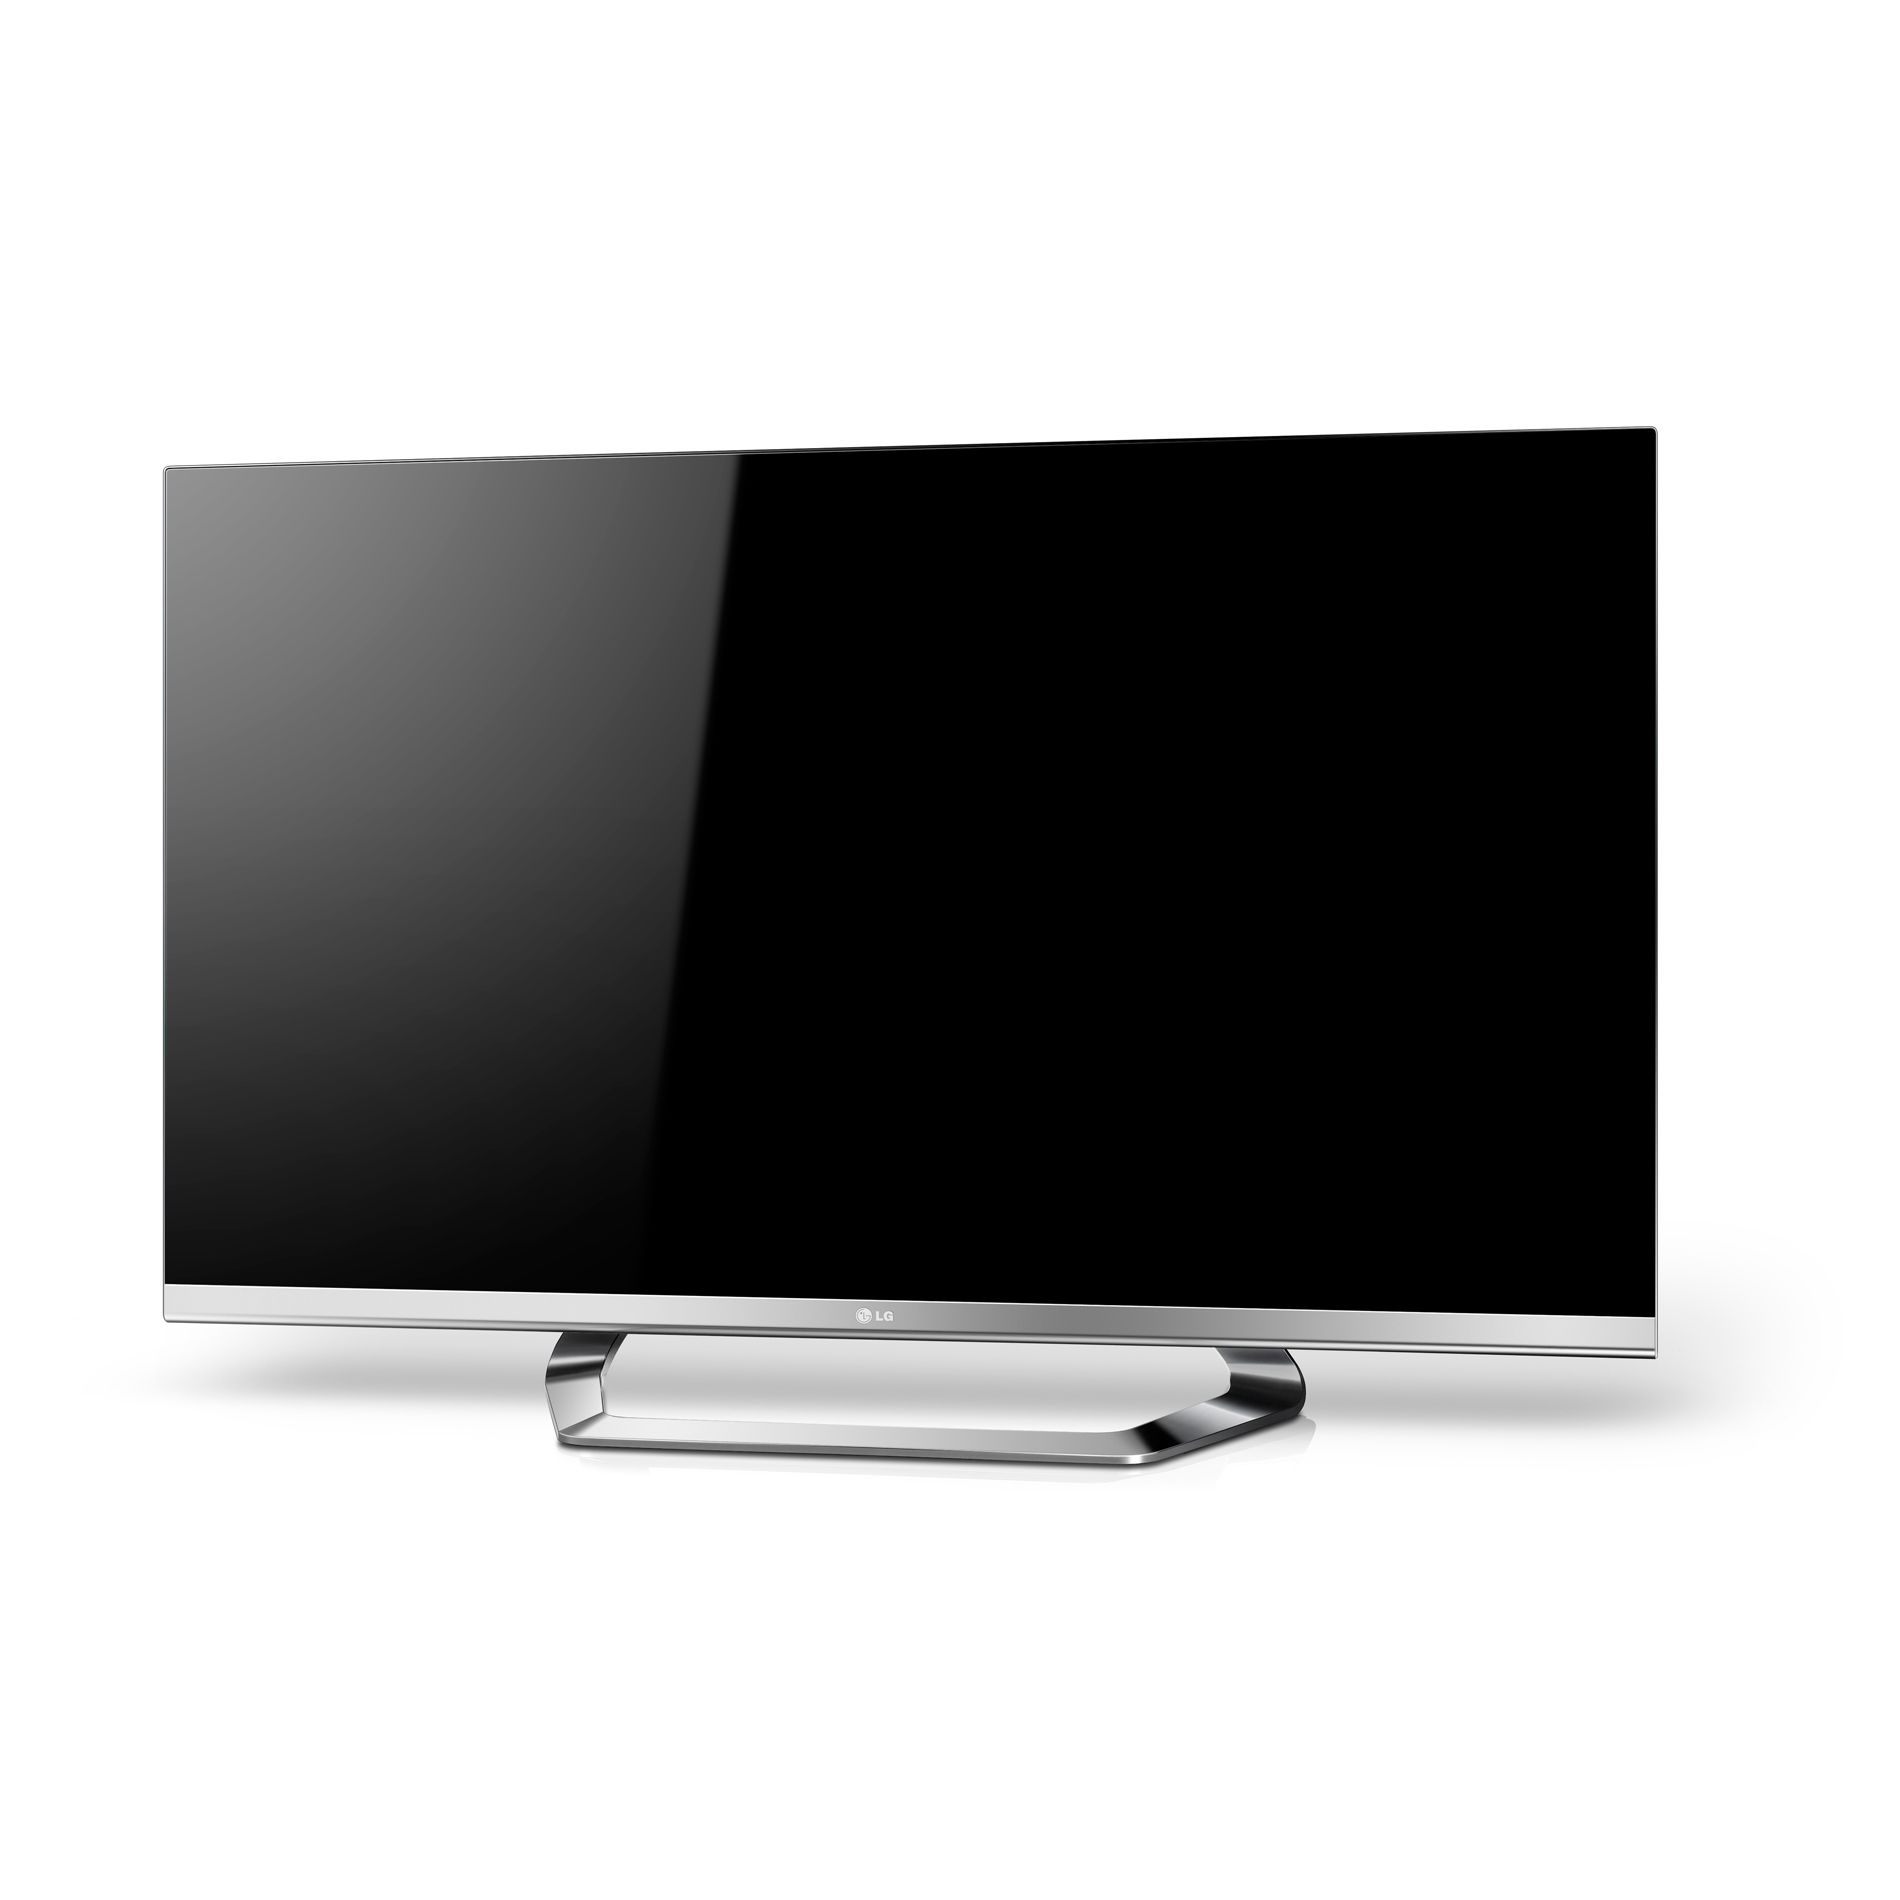 LG 47LM6700 47 3D LED HDTV 1080p 120Hz Smart TV Cinema